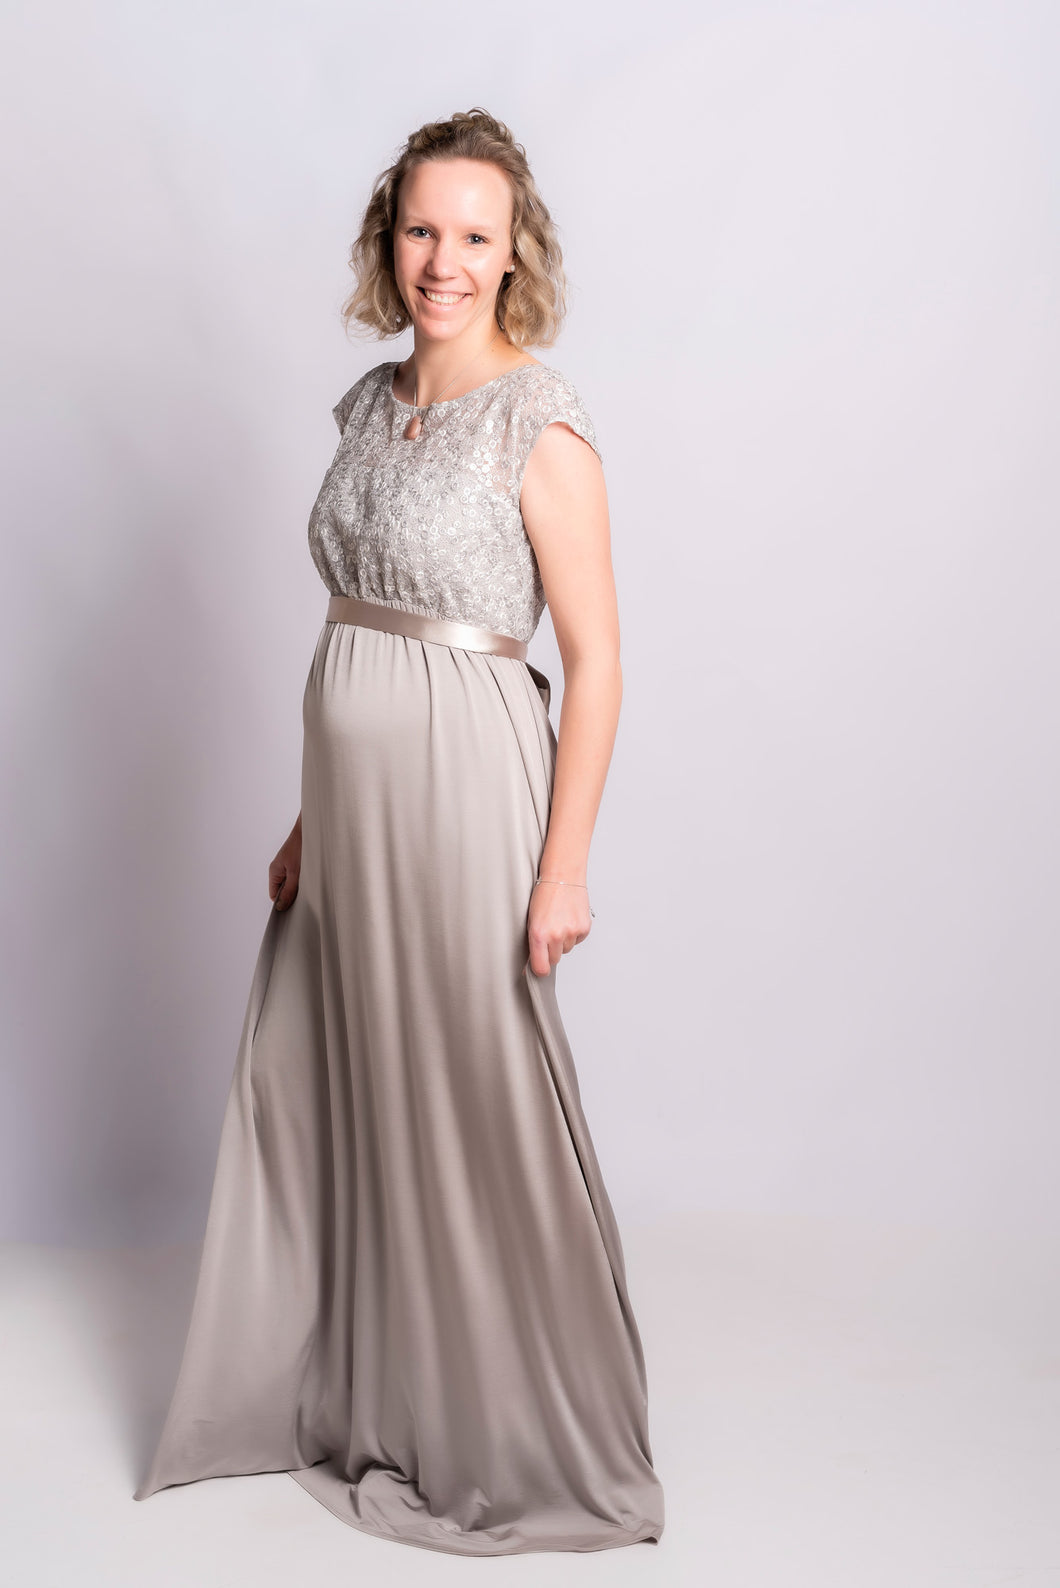 Tiffany Rose - Mia gown silver  | MILD zwangerschapsboetiek - zwangerschapskleding bij Mechelen